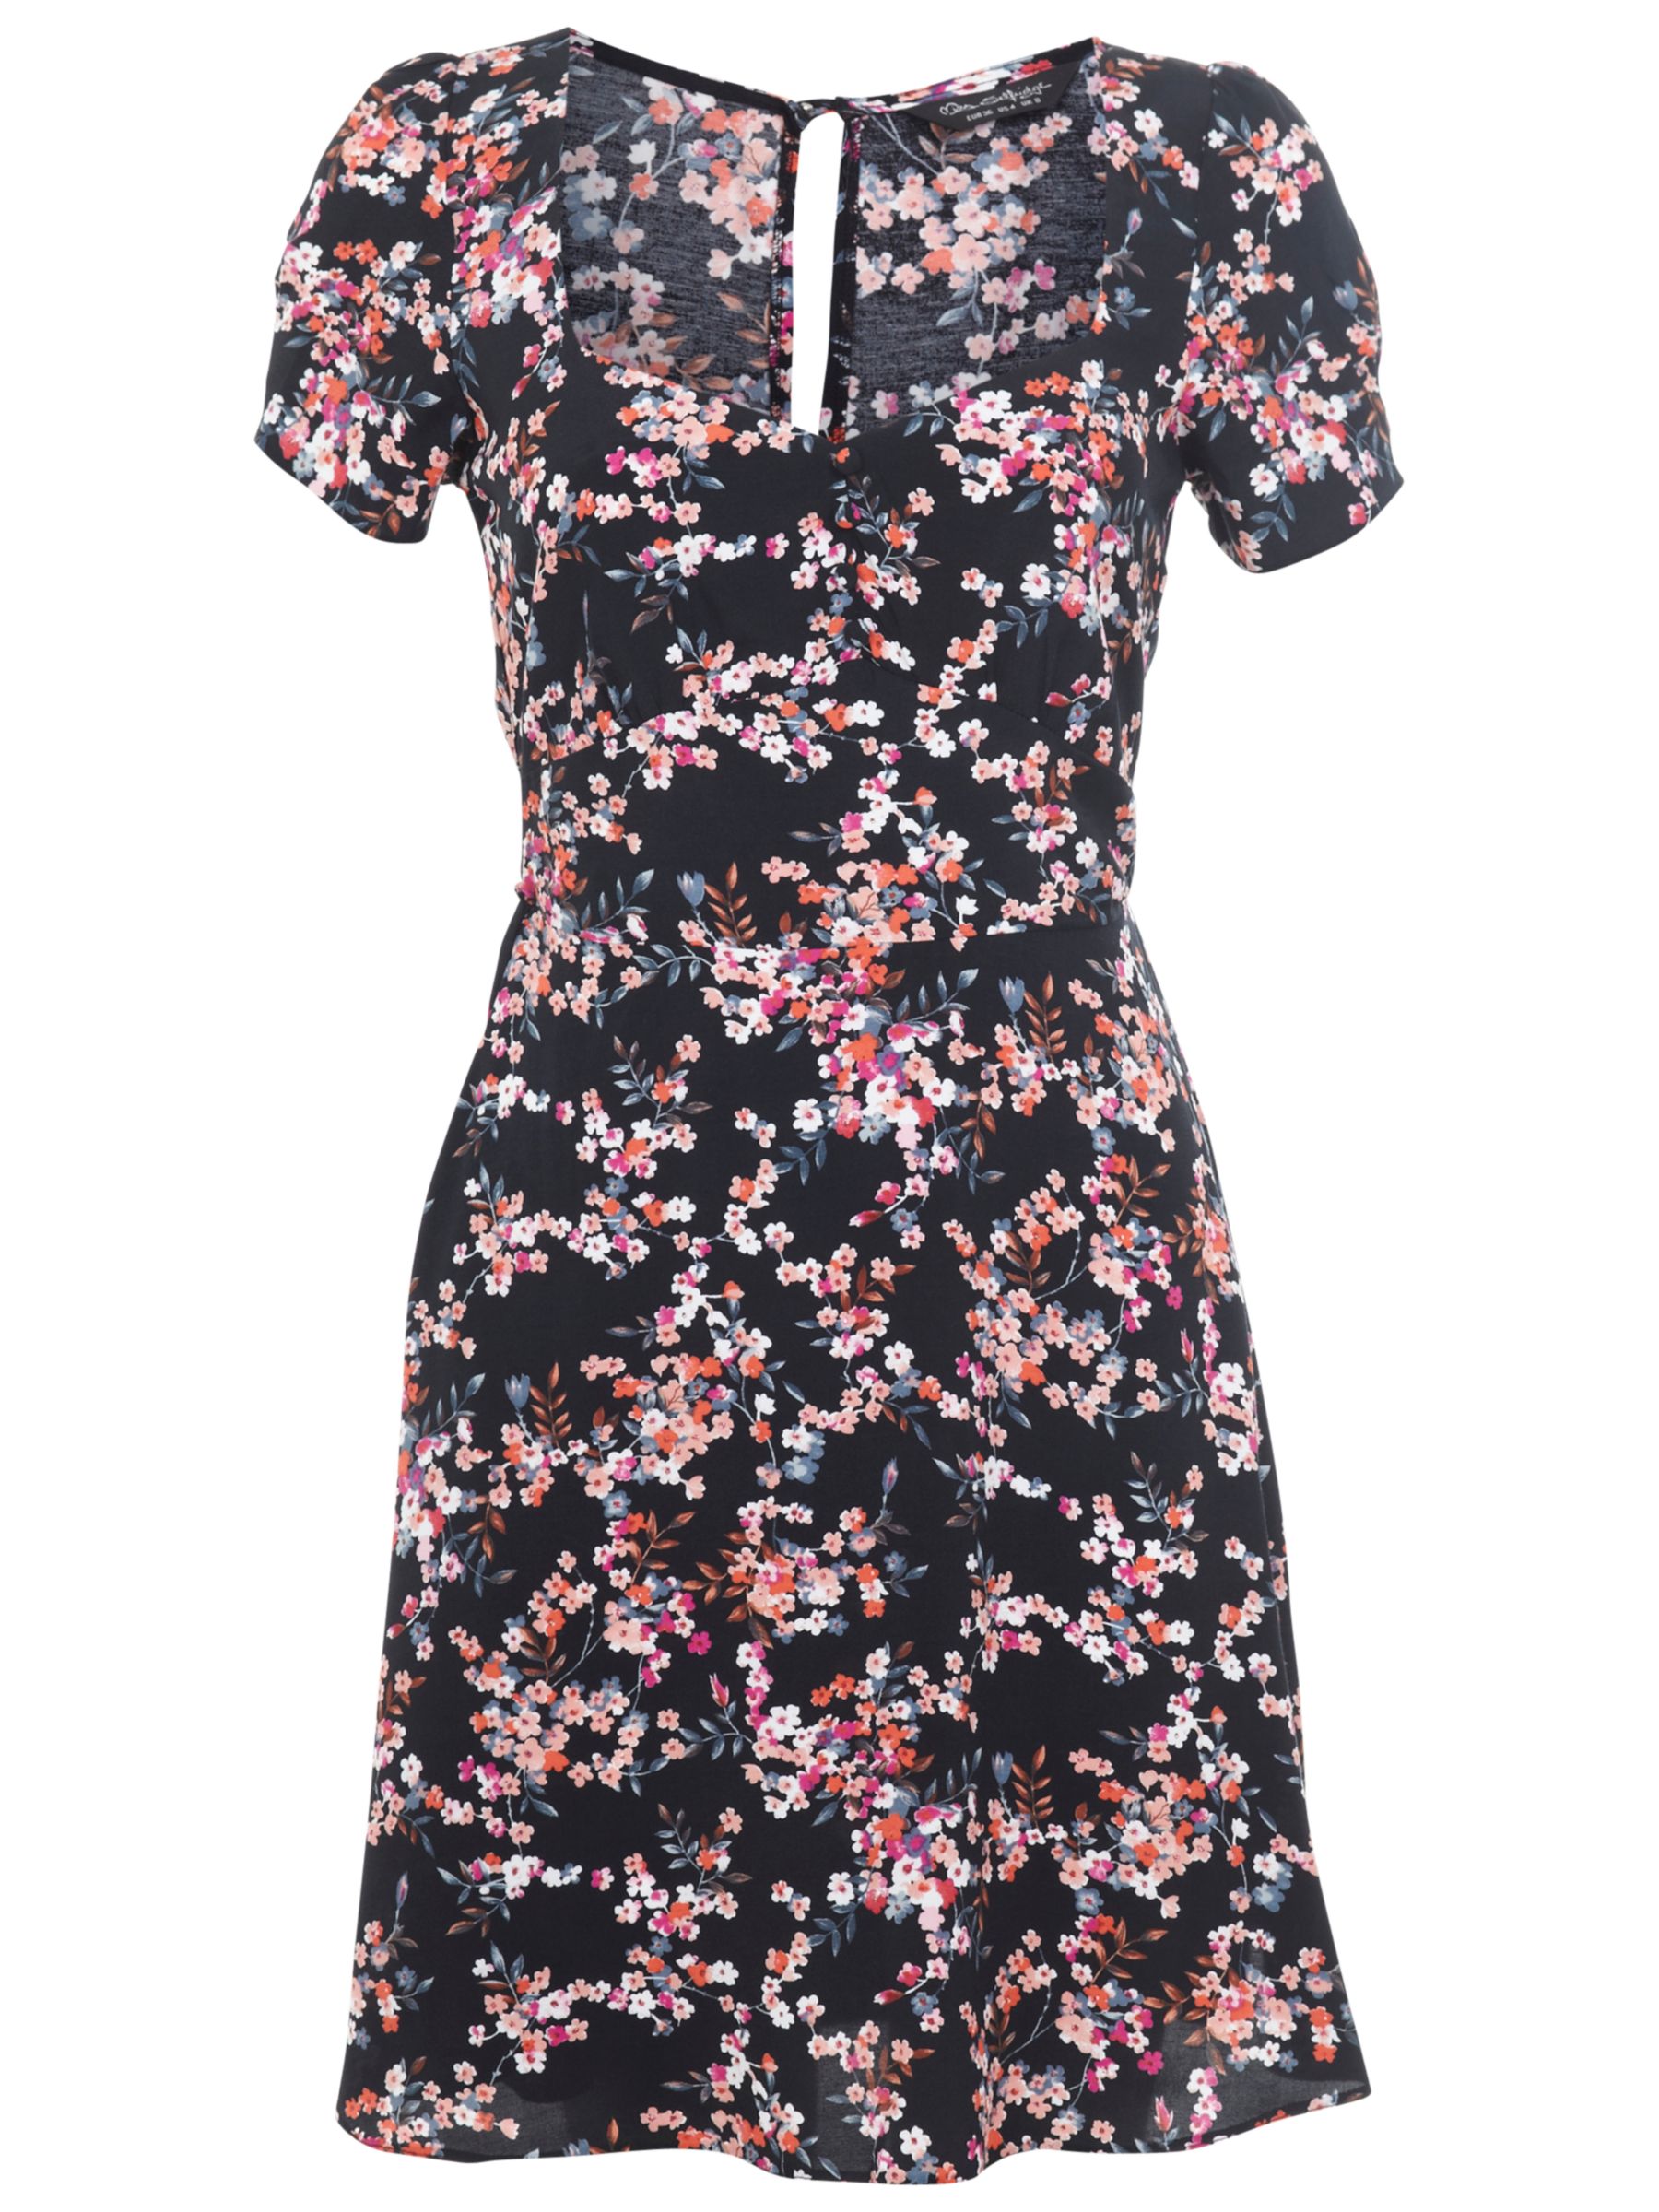 miss selfridge floral tea dress